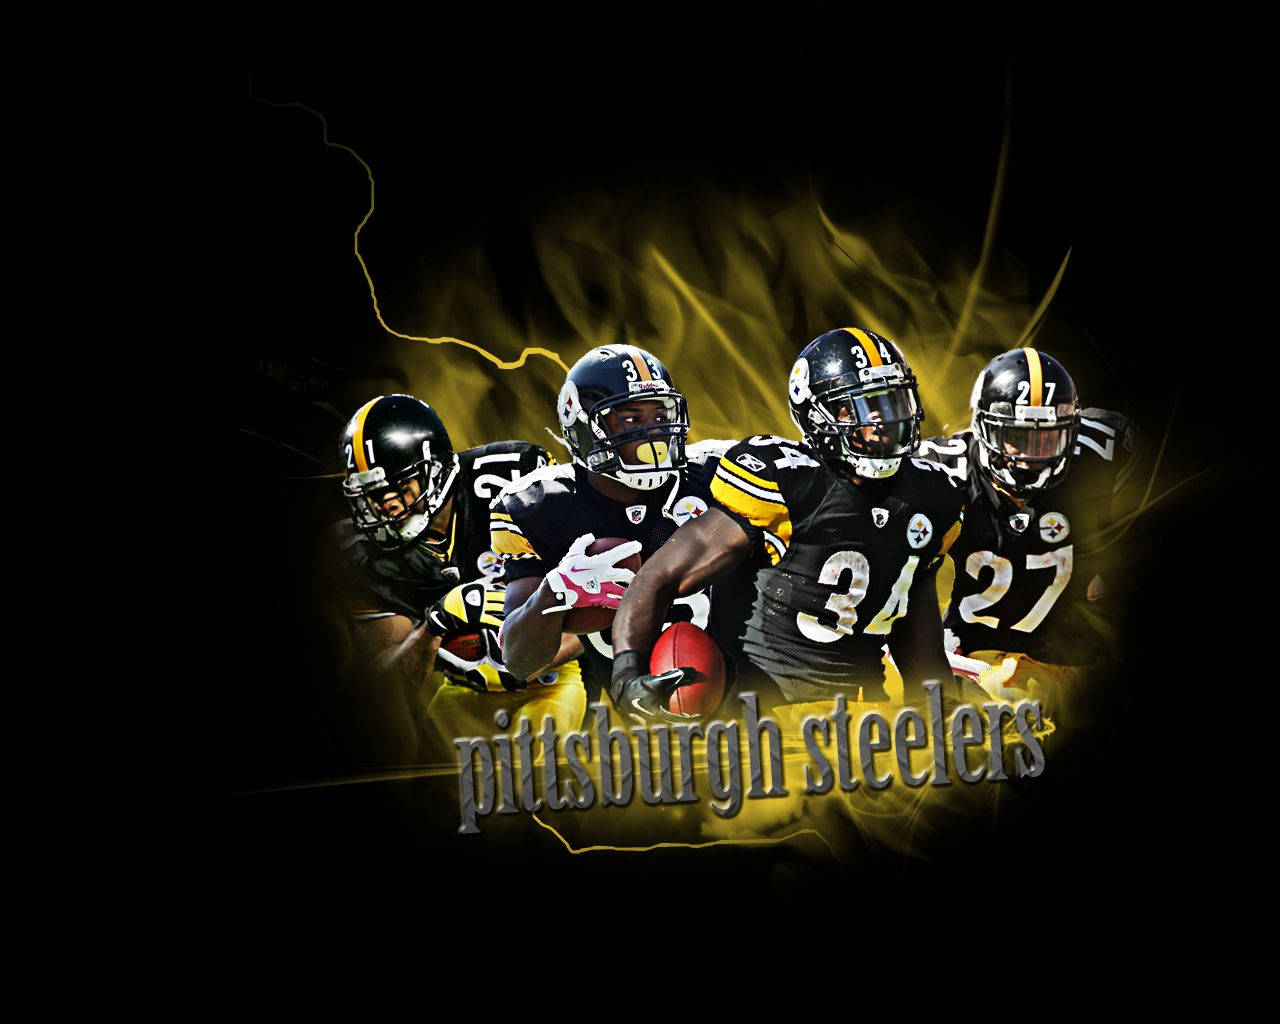 Ospittsburgh Steelers, Campeões Do Super Bowl. Papel de Parede